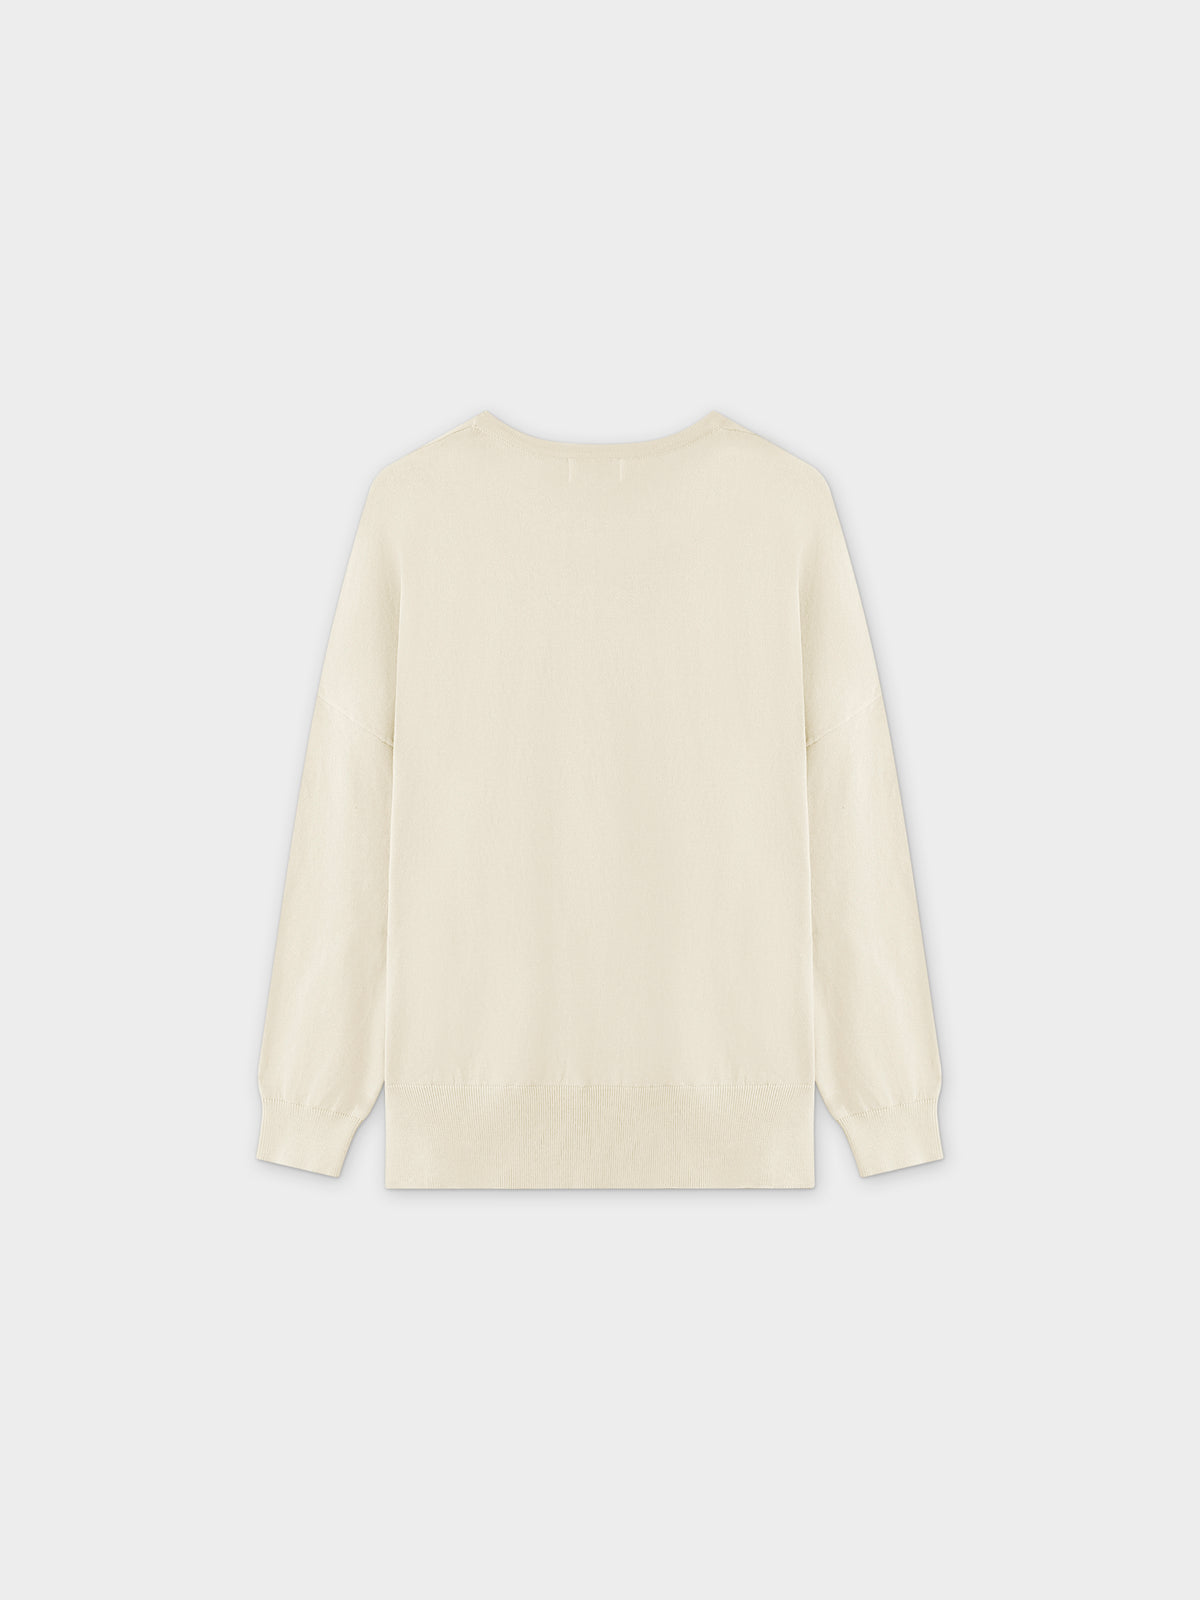 Oversized Lightweight Sweater-Ivory